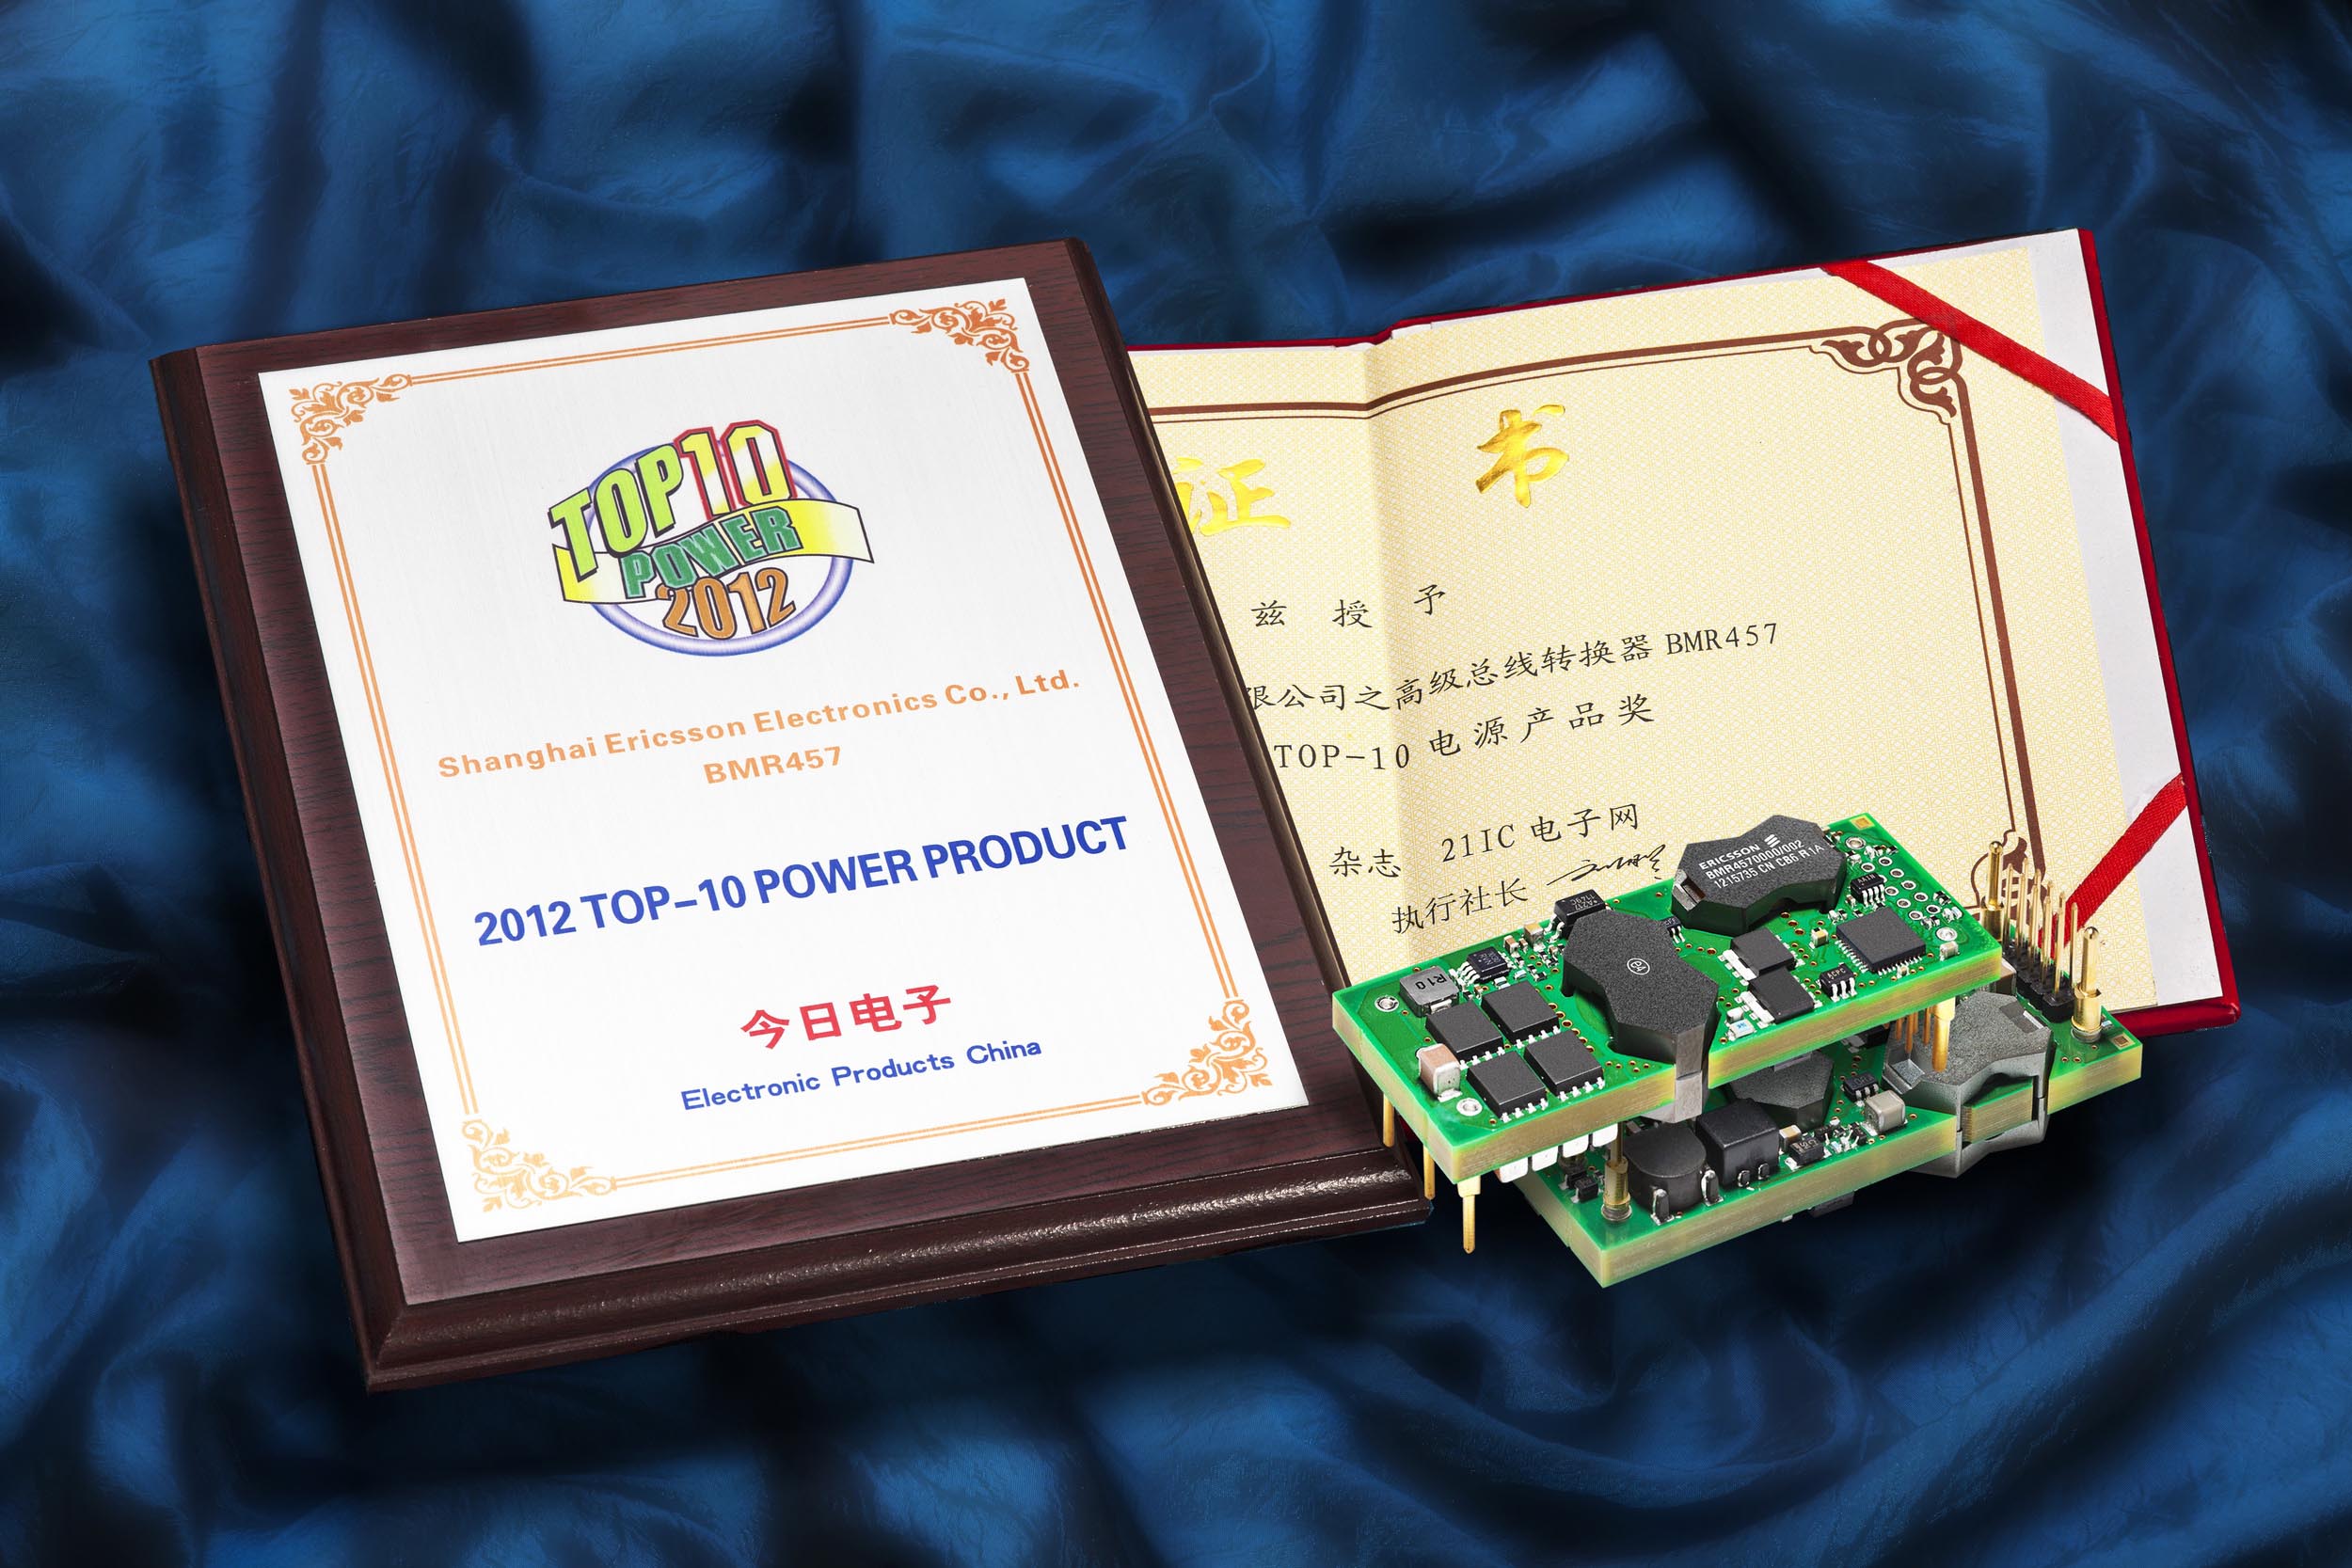 Ericsson Digital Power module wins Electronic Products China Award